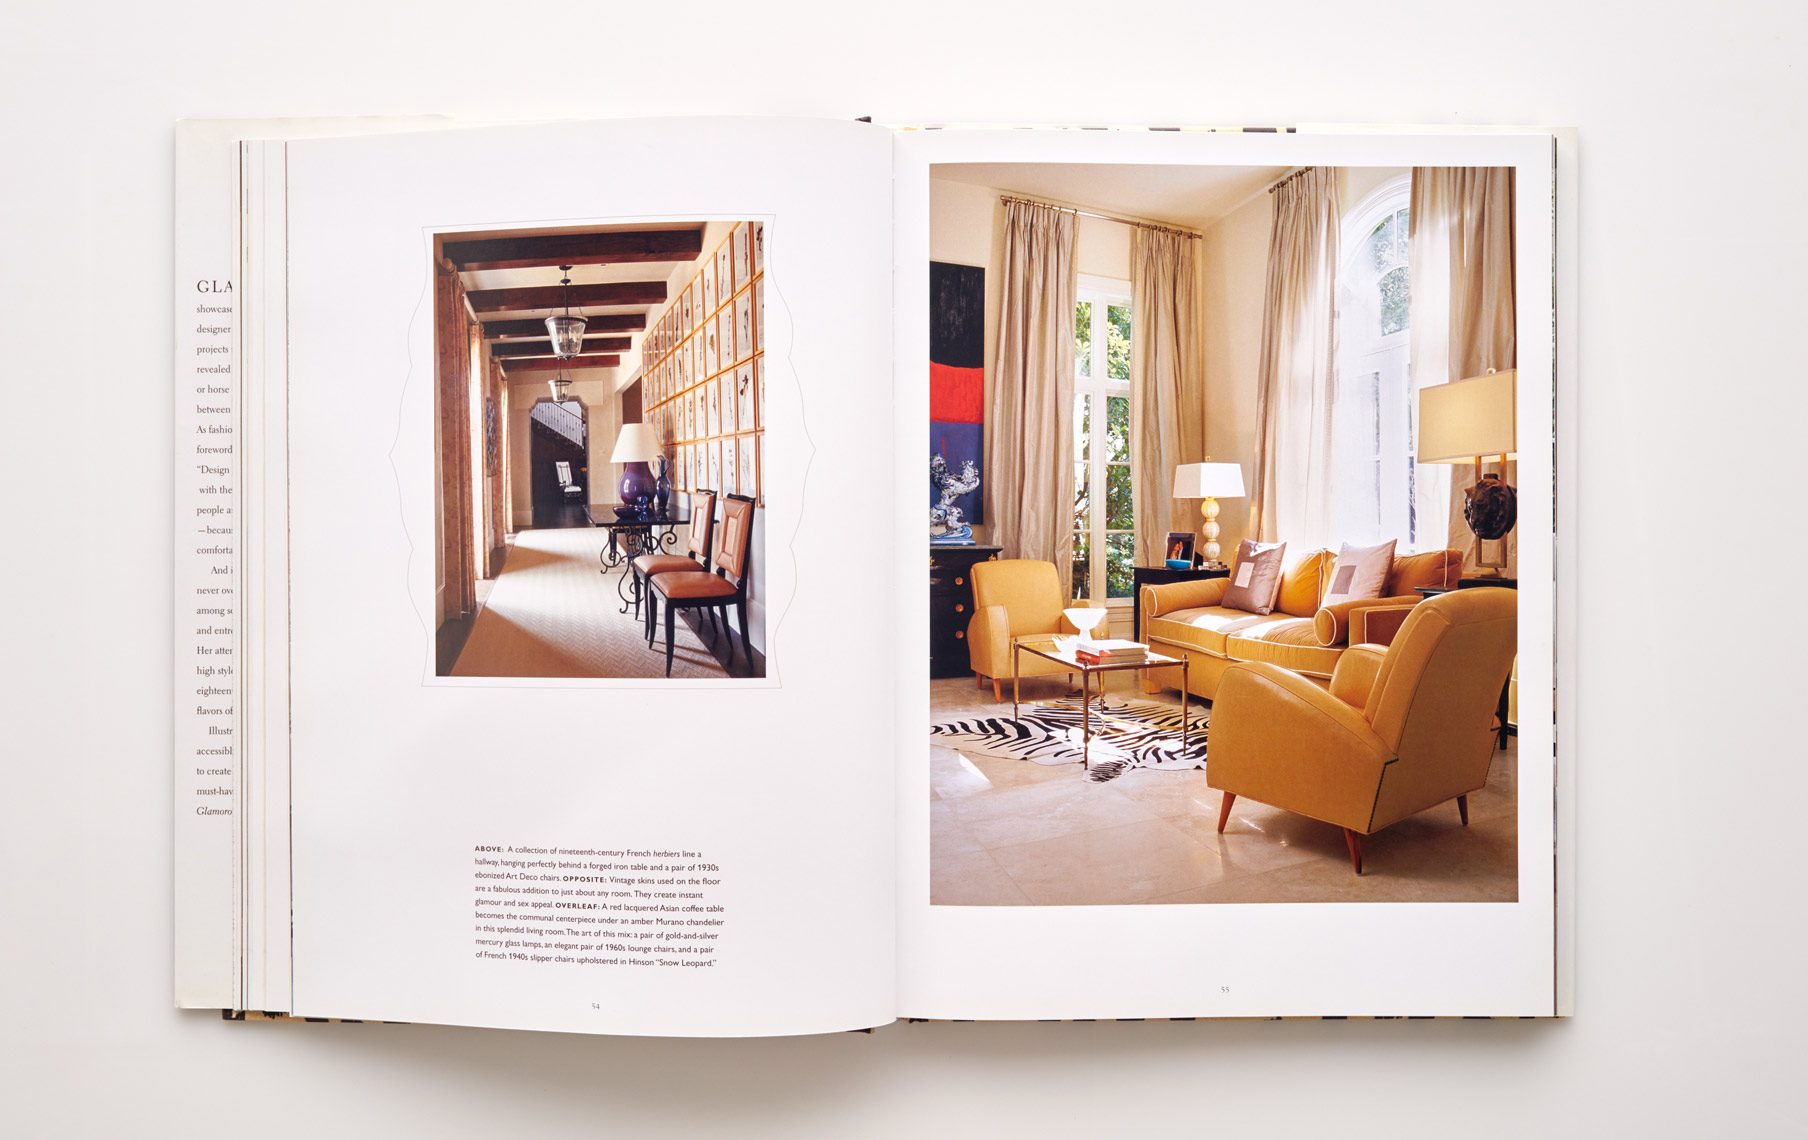 Stephen Karlisch Jan Showers Glamorous Rooms Living Room Intimate